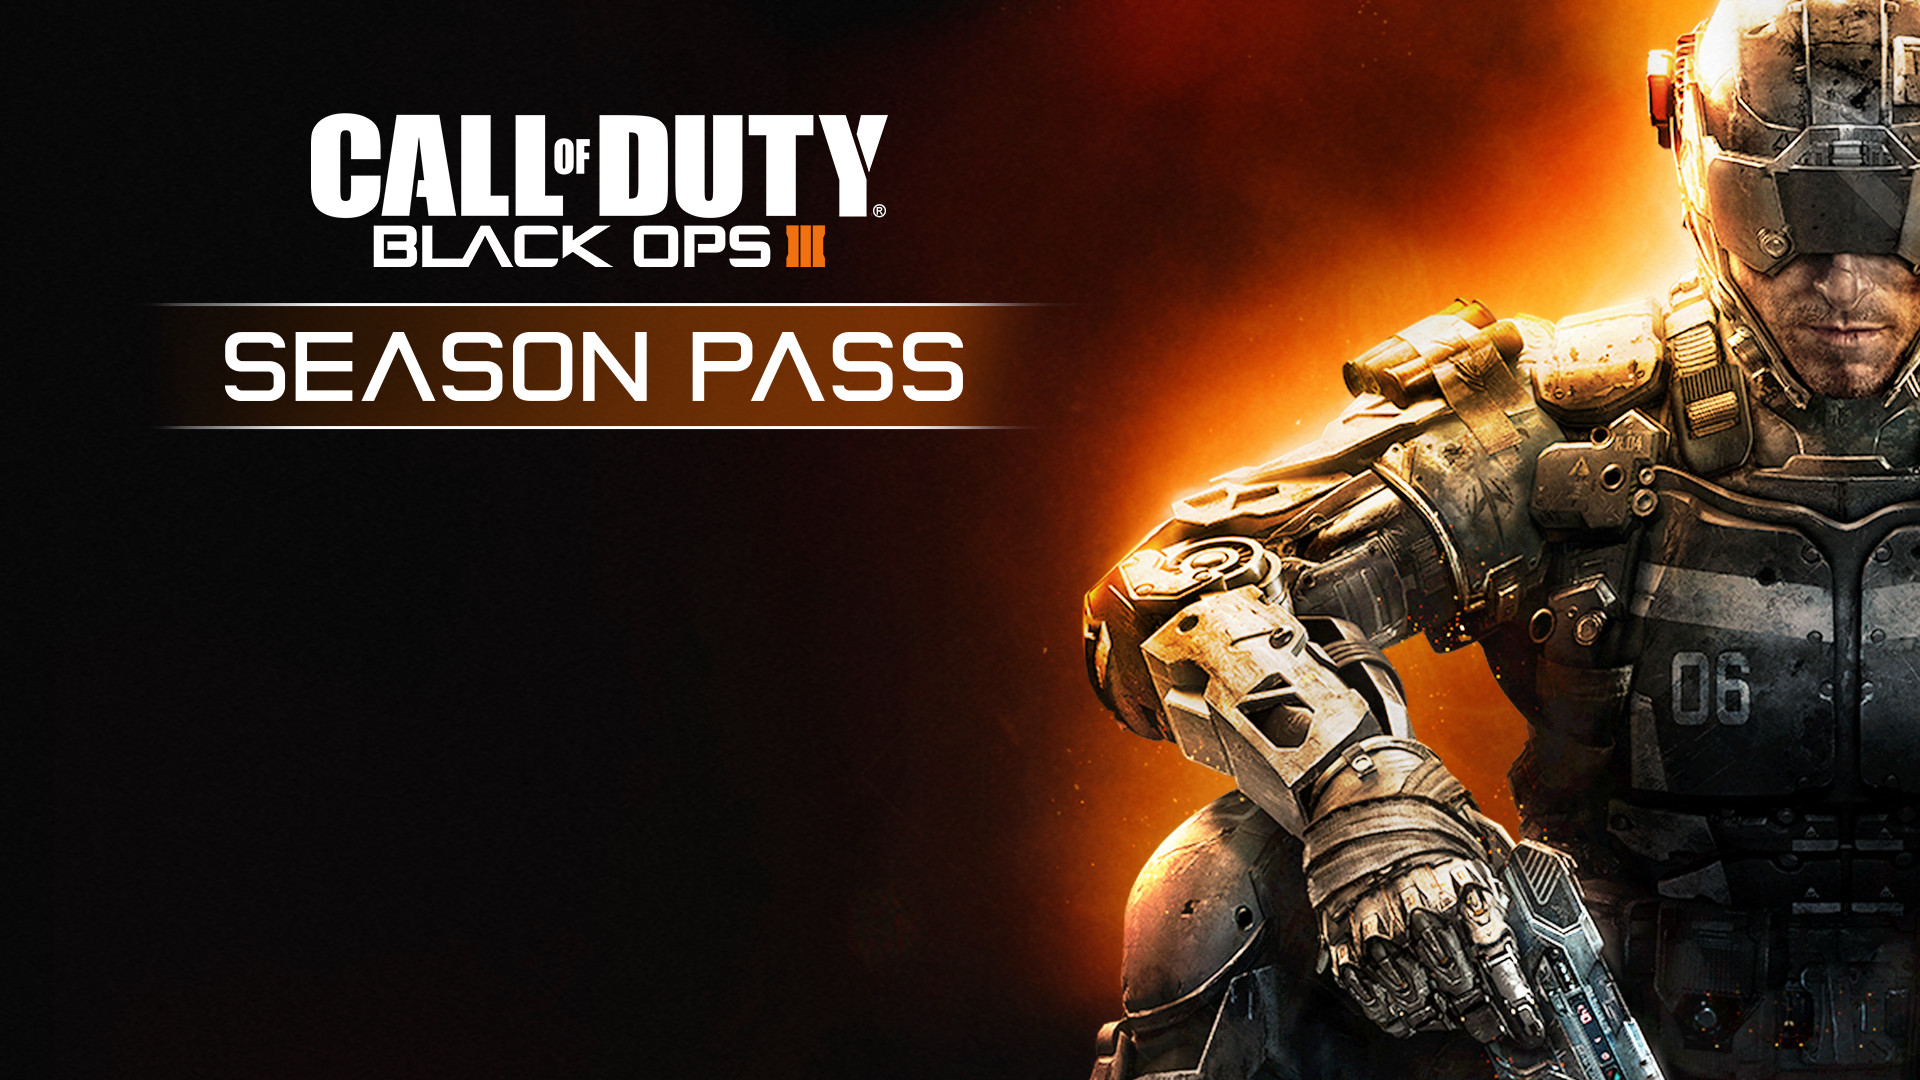 Call of Duty®: Black Ops III - Season Pass Featured Screenshot #1